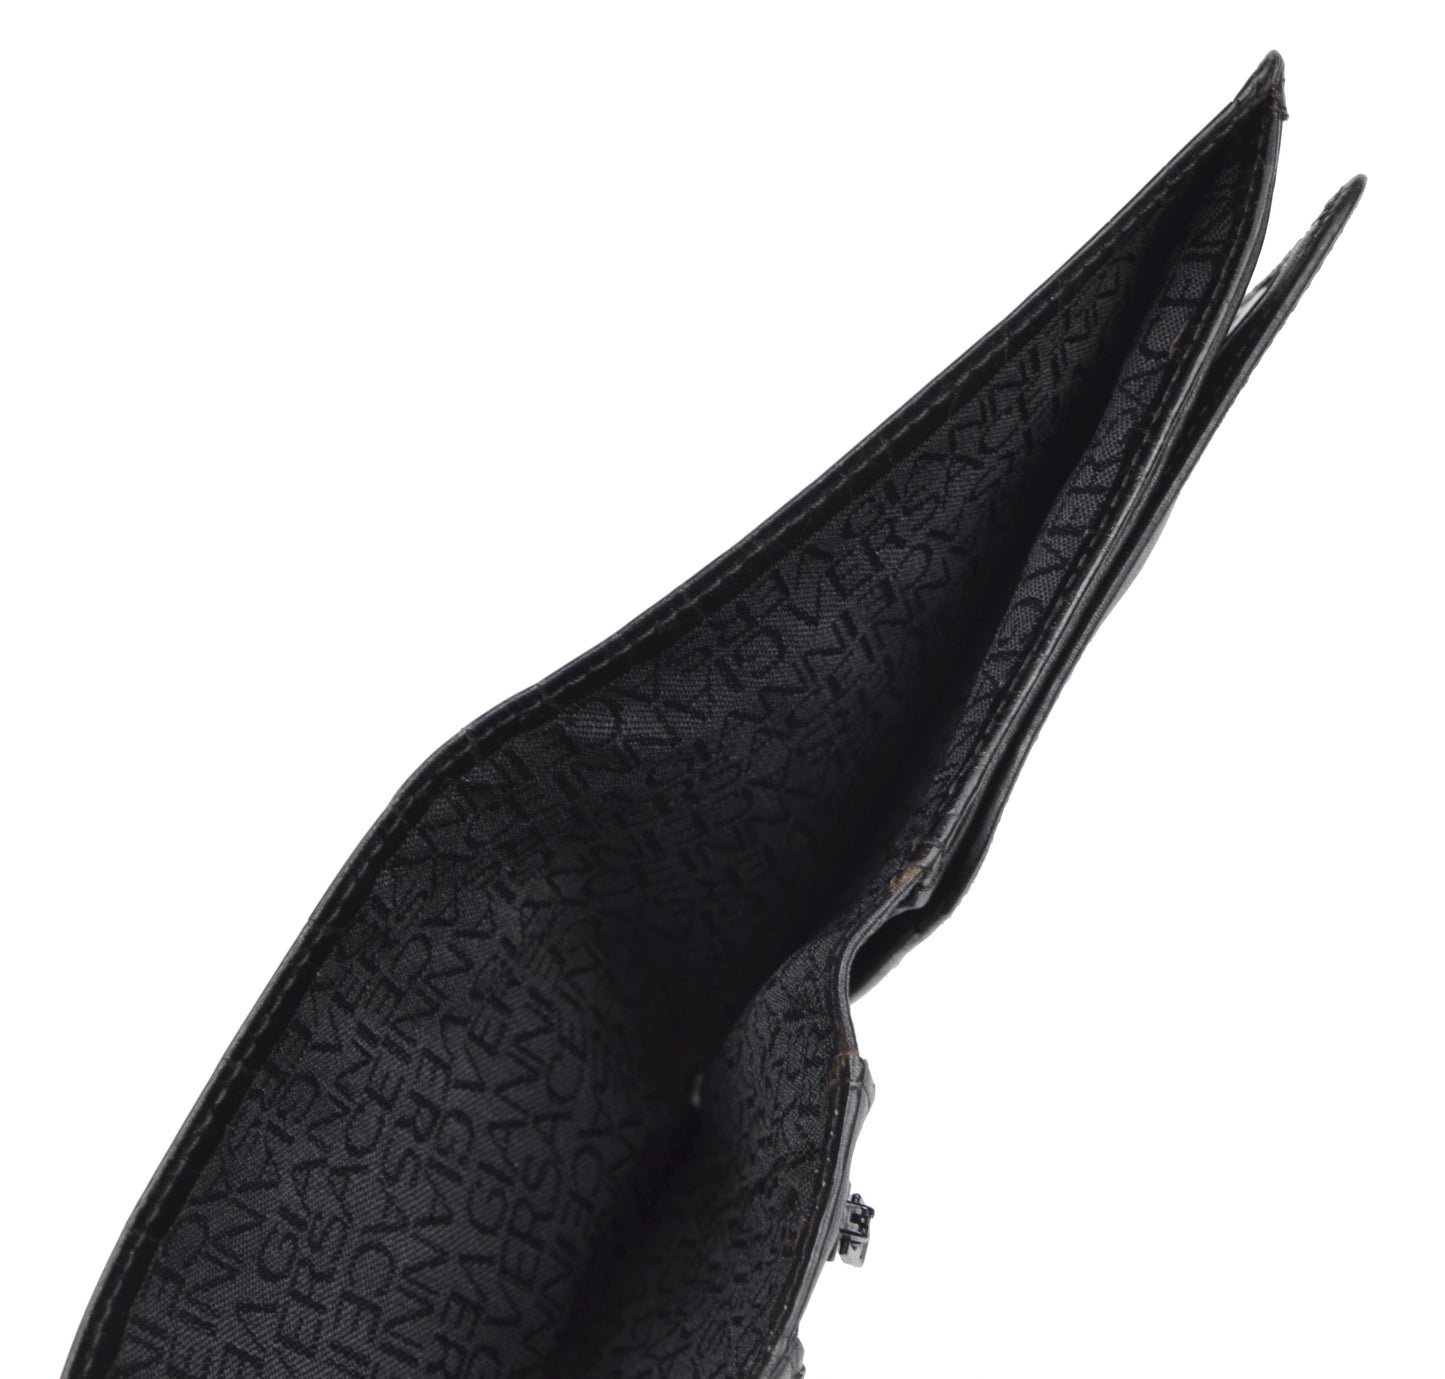 Vintage '90s Gianni Versace Leather Wallet - Black